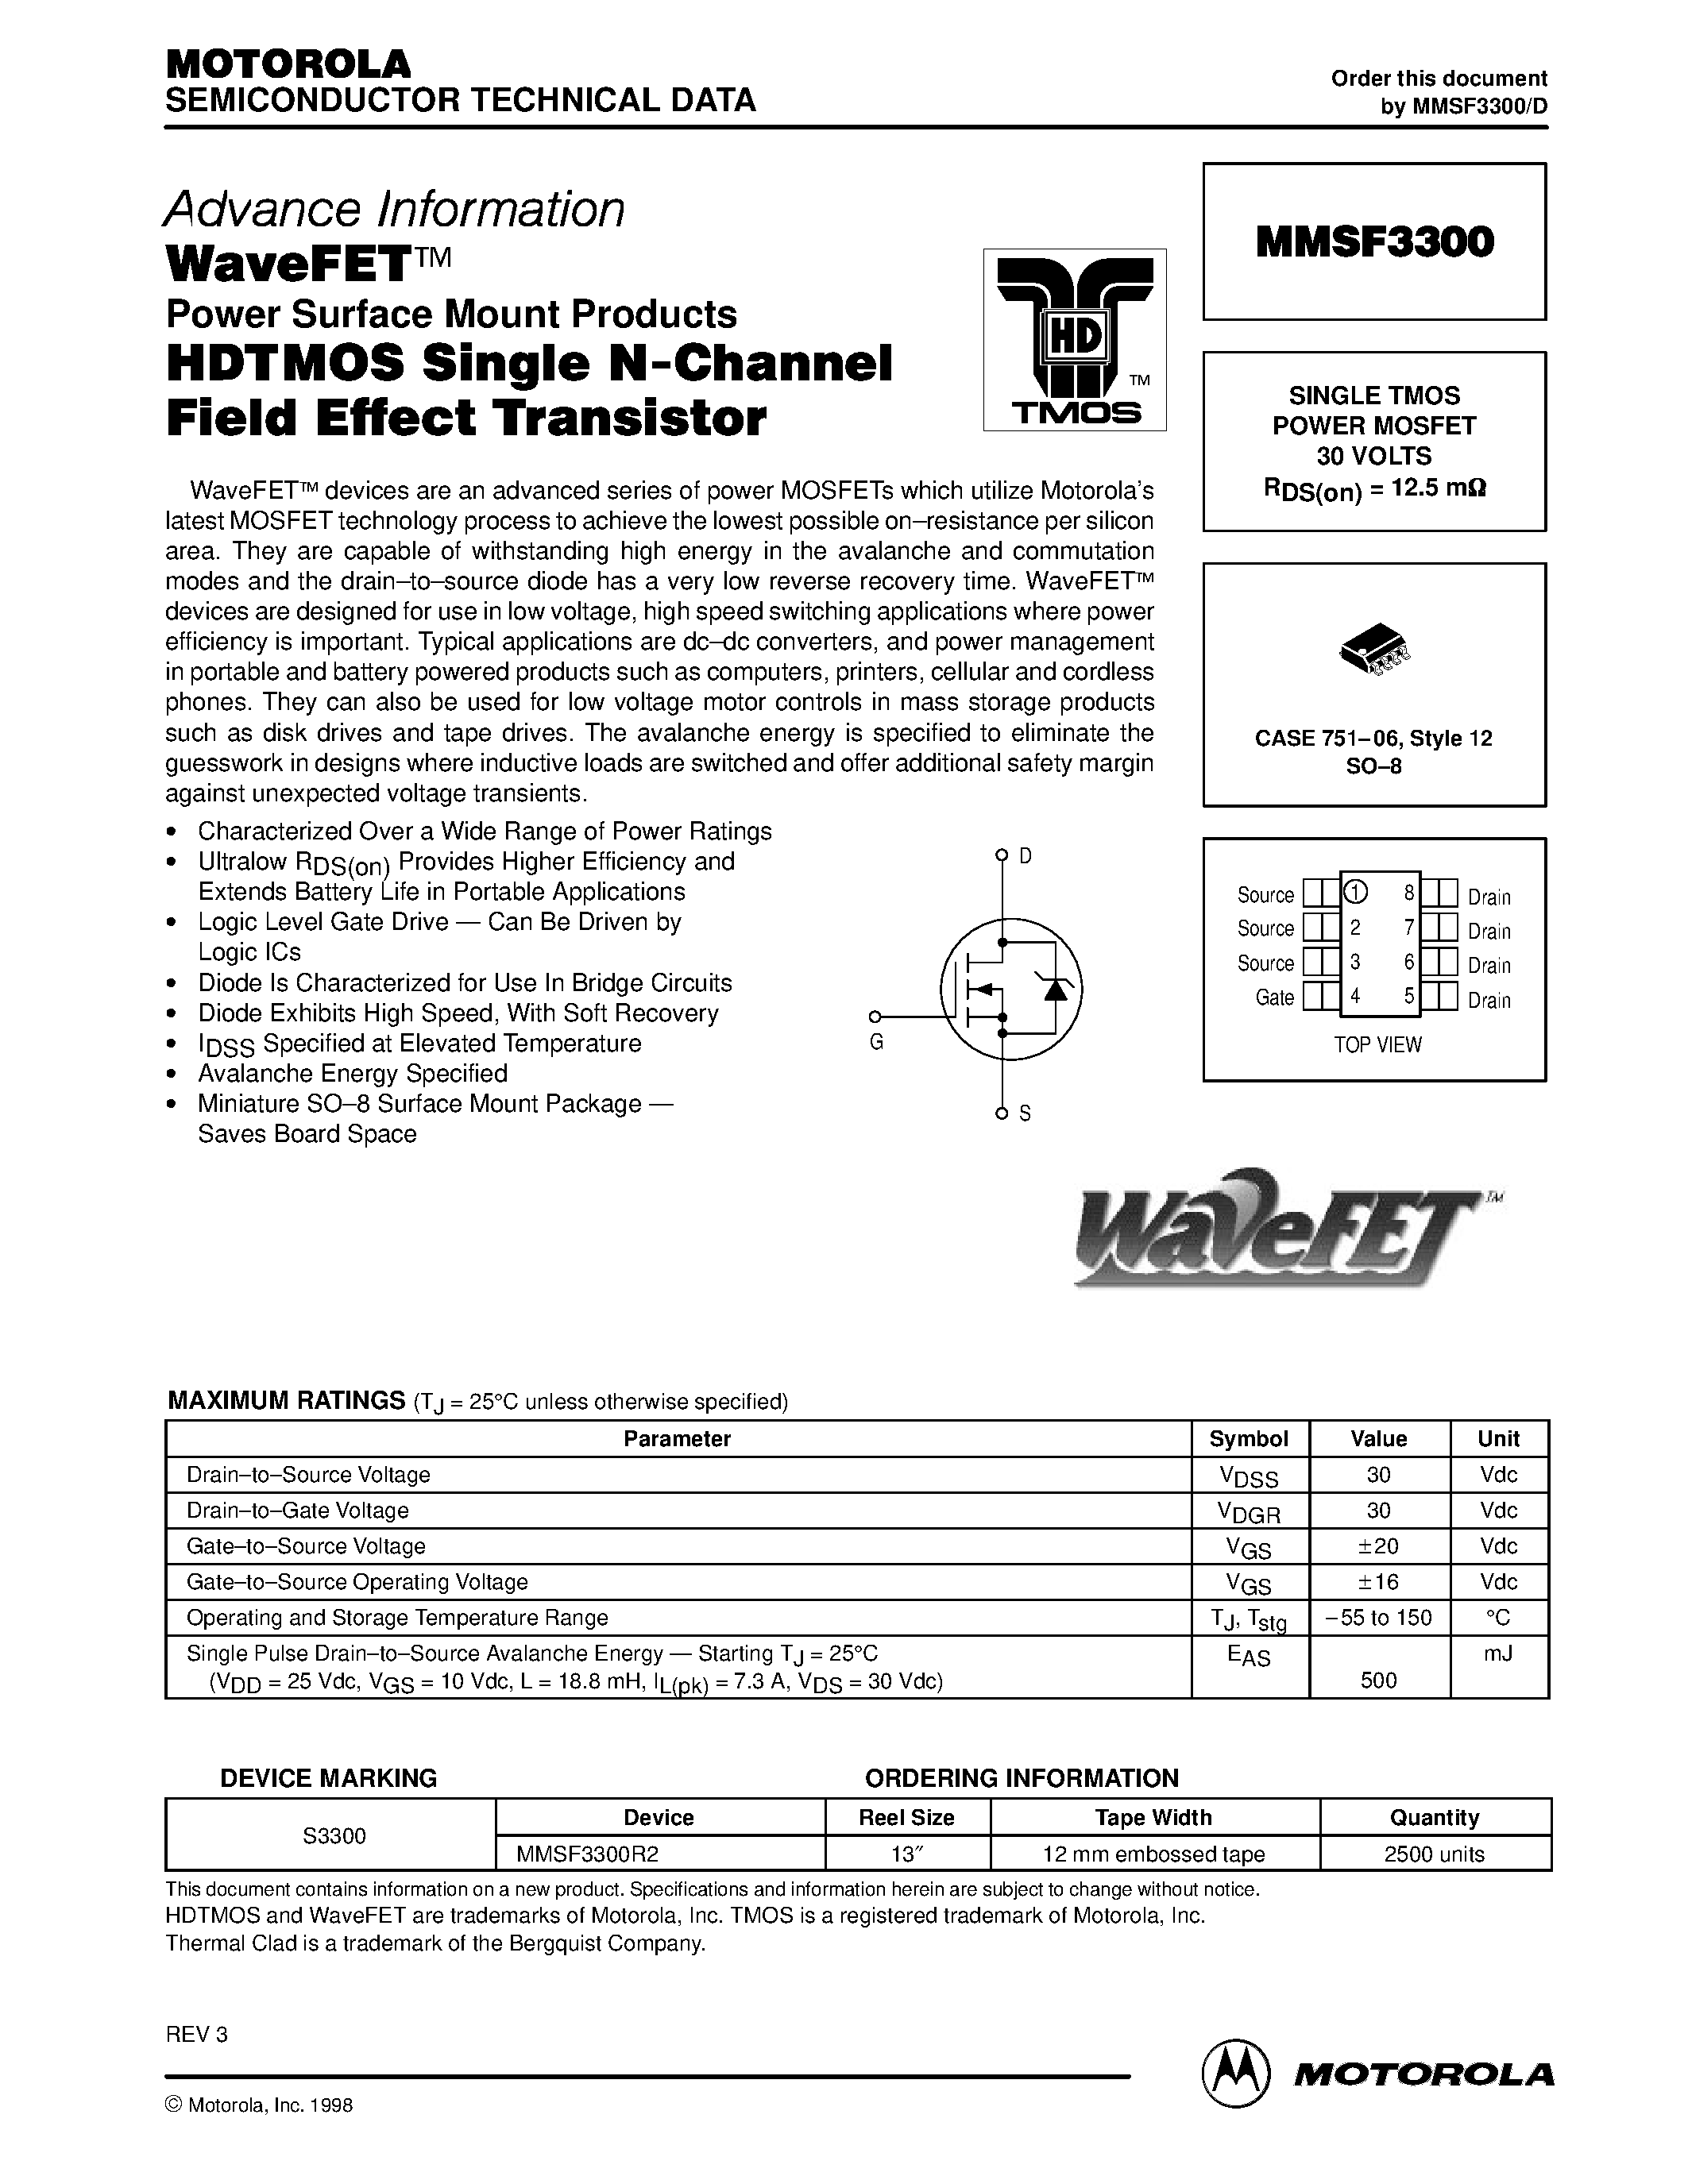 Даташит MMSF3300 - SINGLE TMOS POWER MOSFET 30 VOLTS страница 1